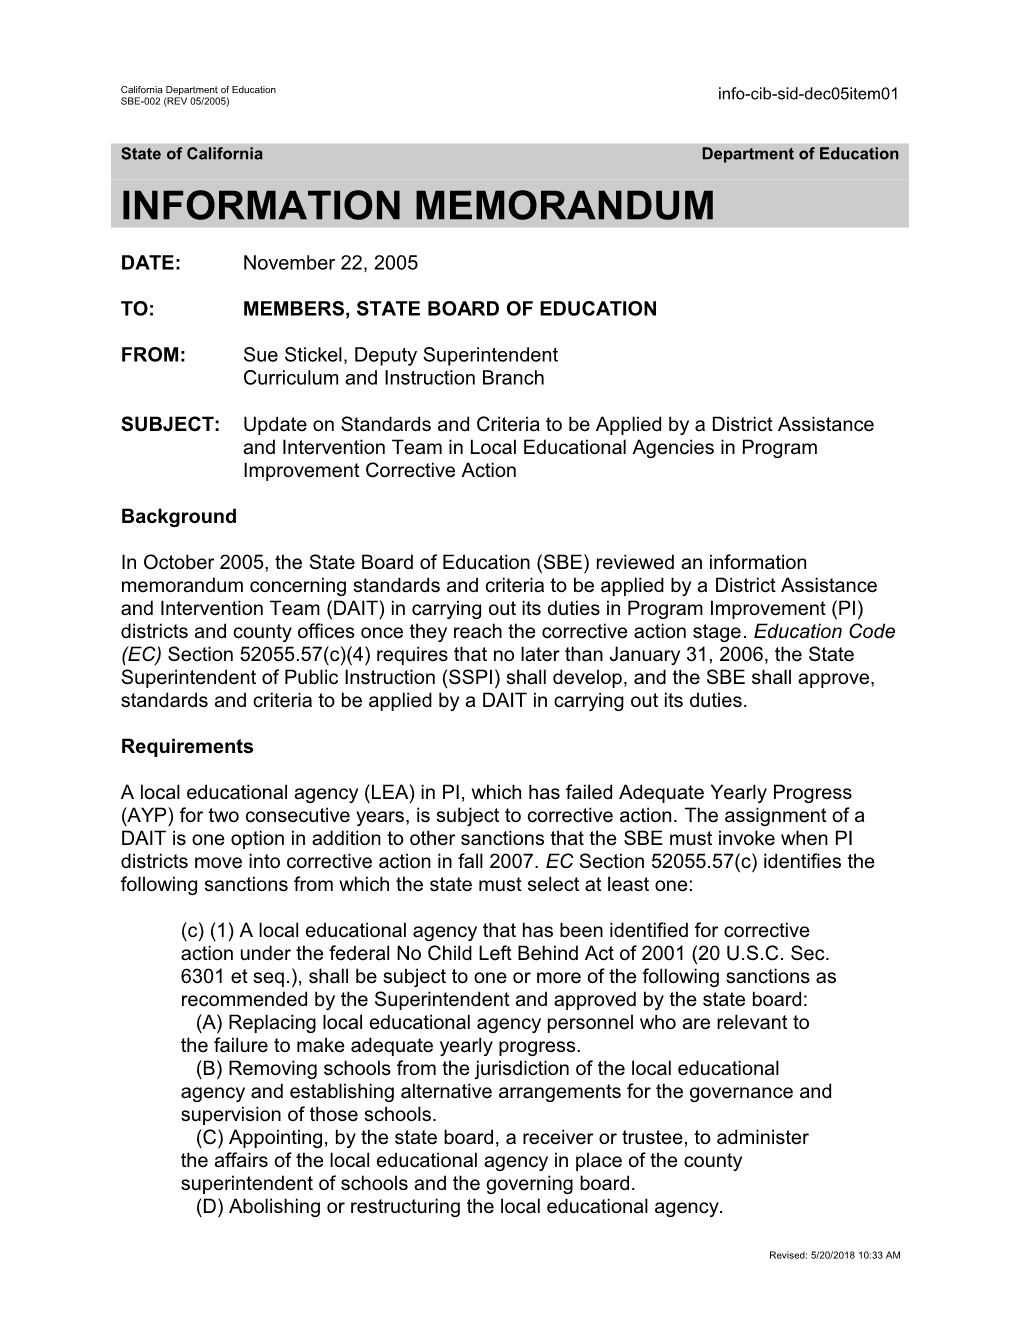 December 2005 SID Item 1 - Information Memorandum (CA State Board of Education)